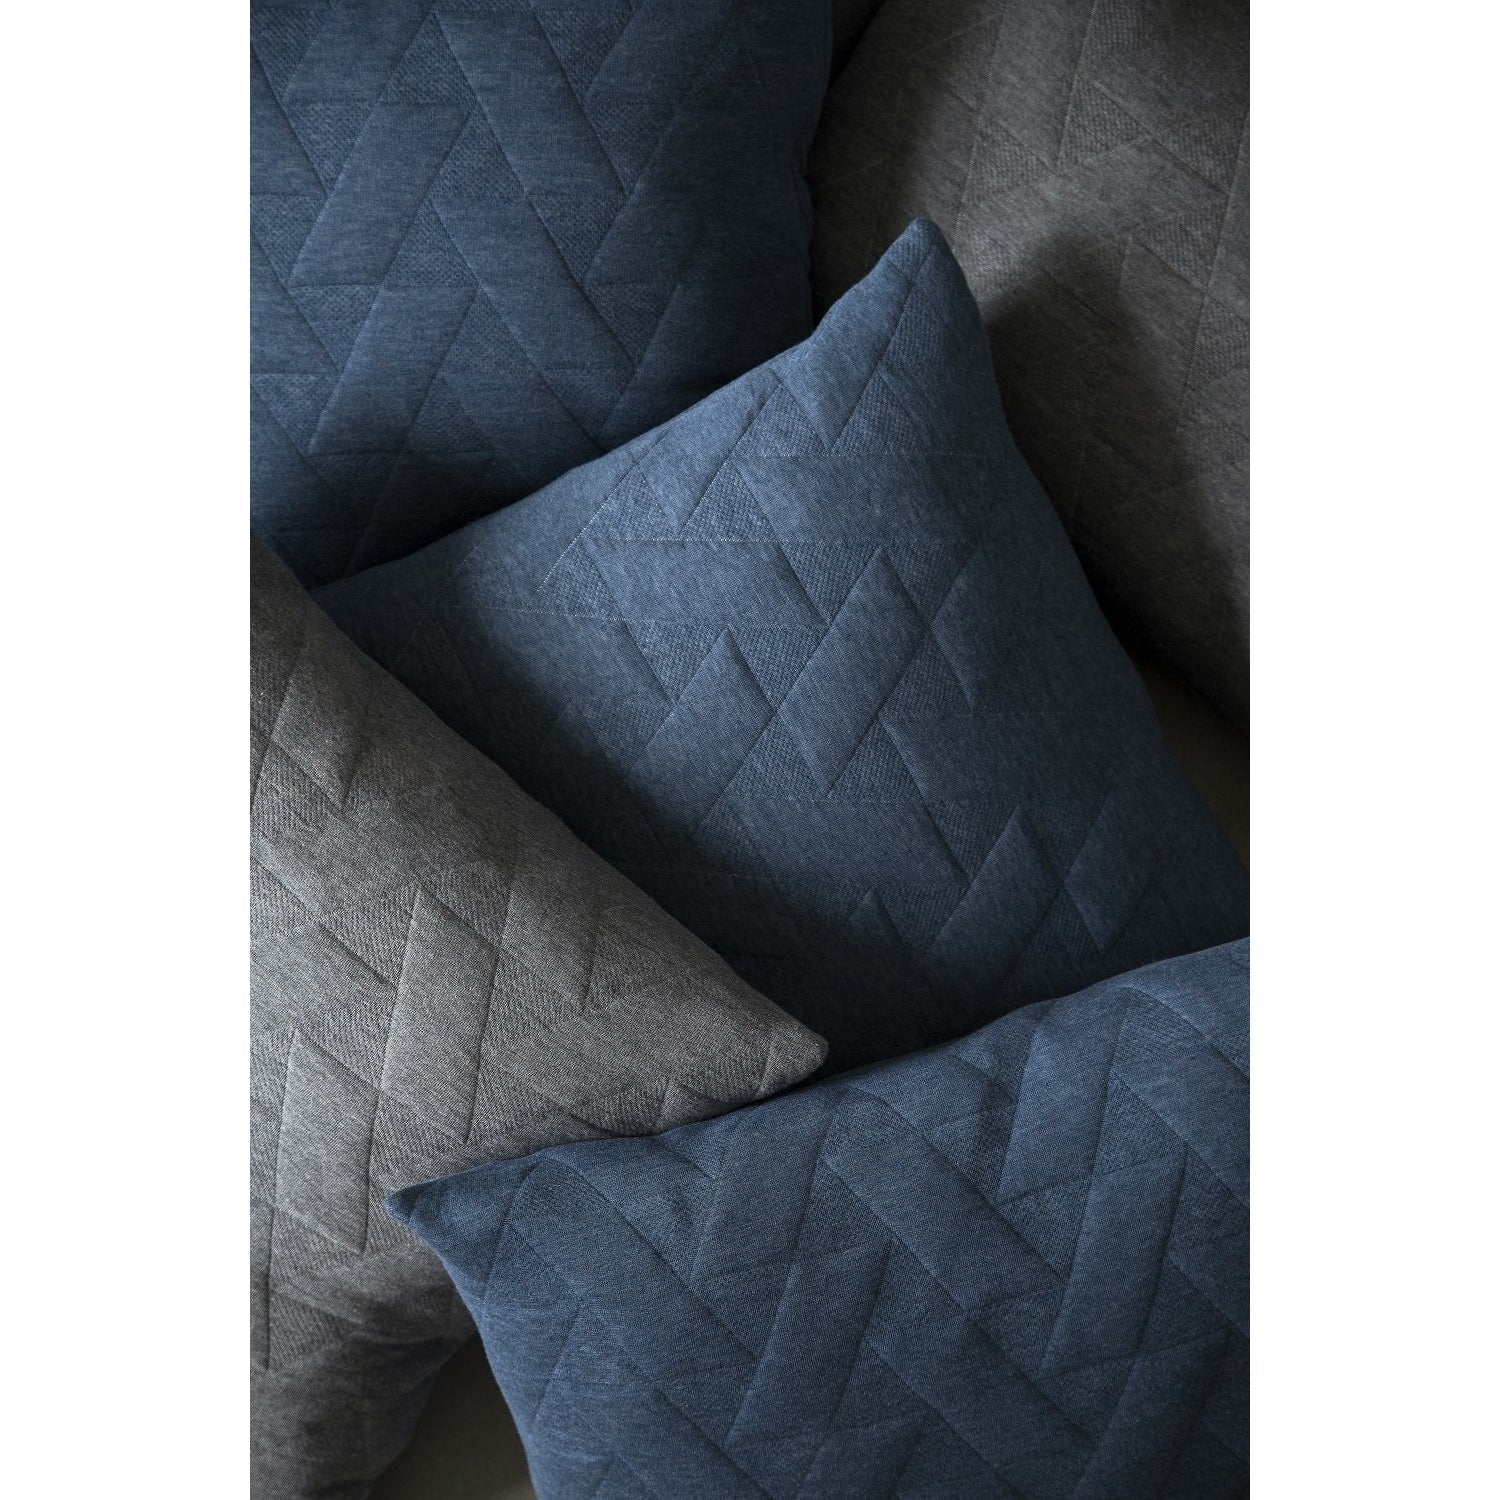 Architectmade Finn Juhl Pattern Pude, grå 40x60